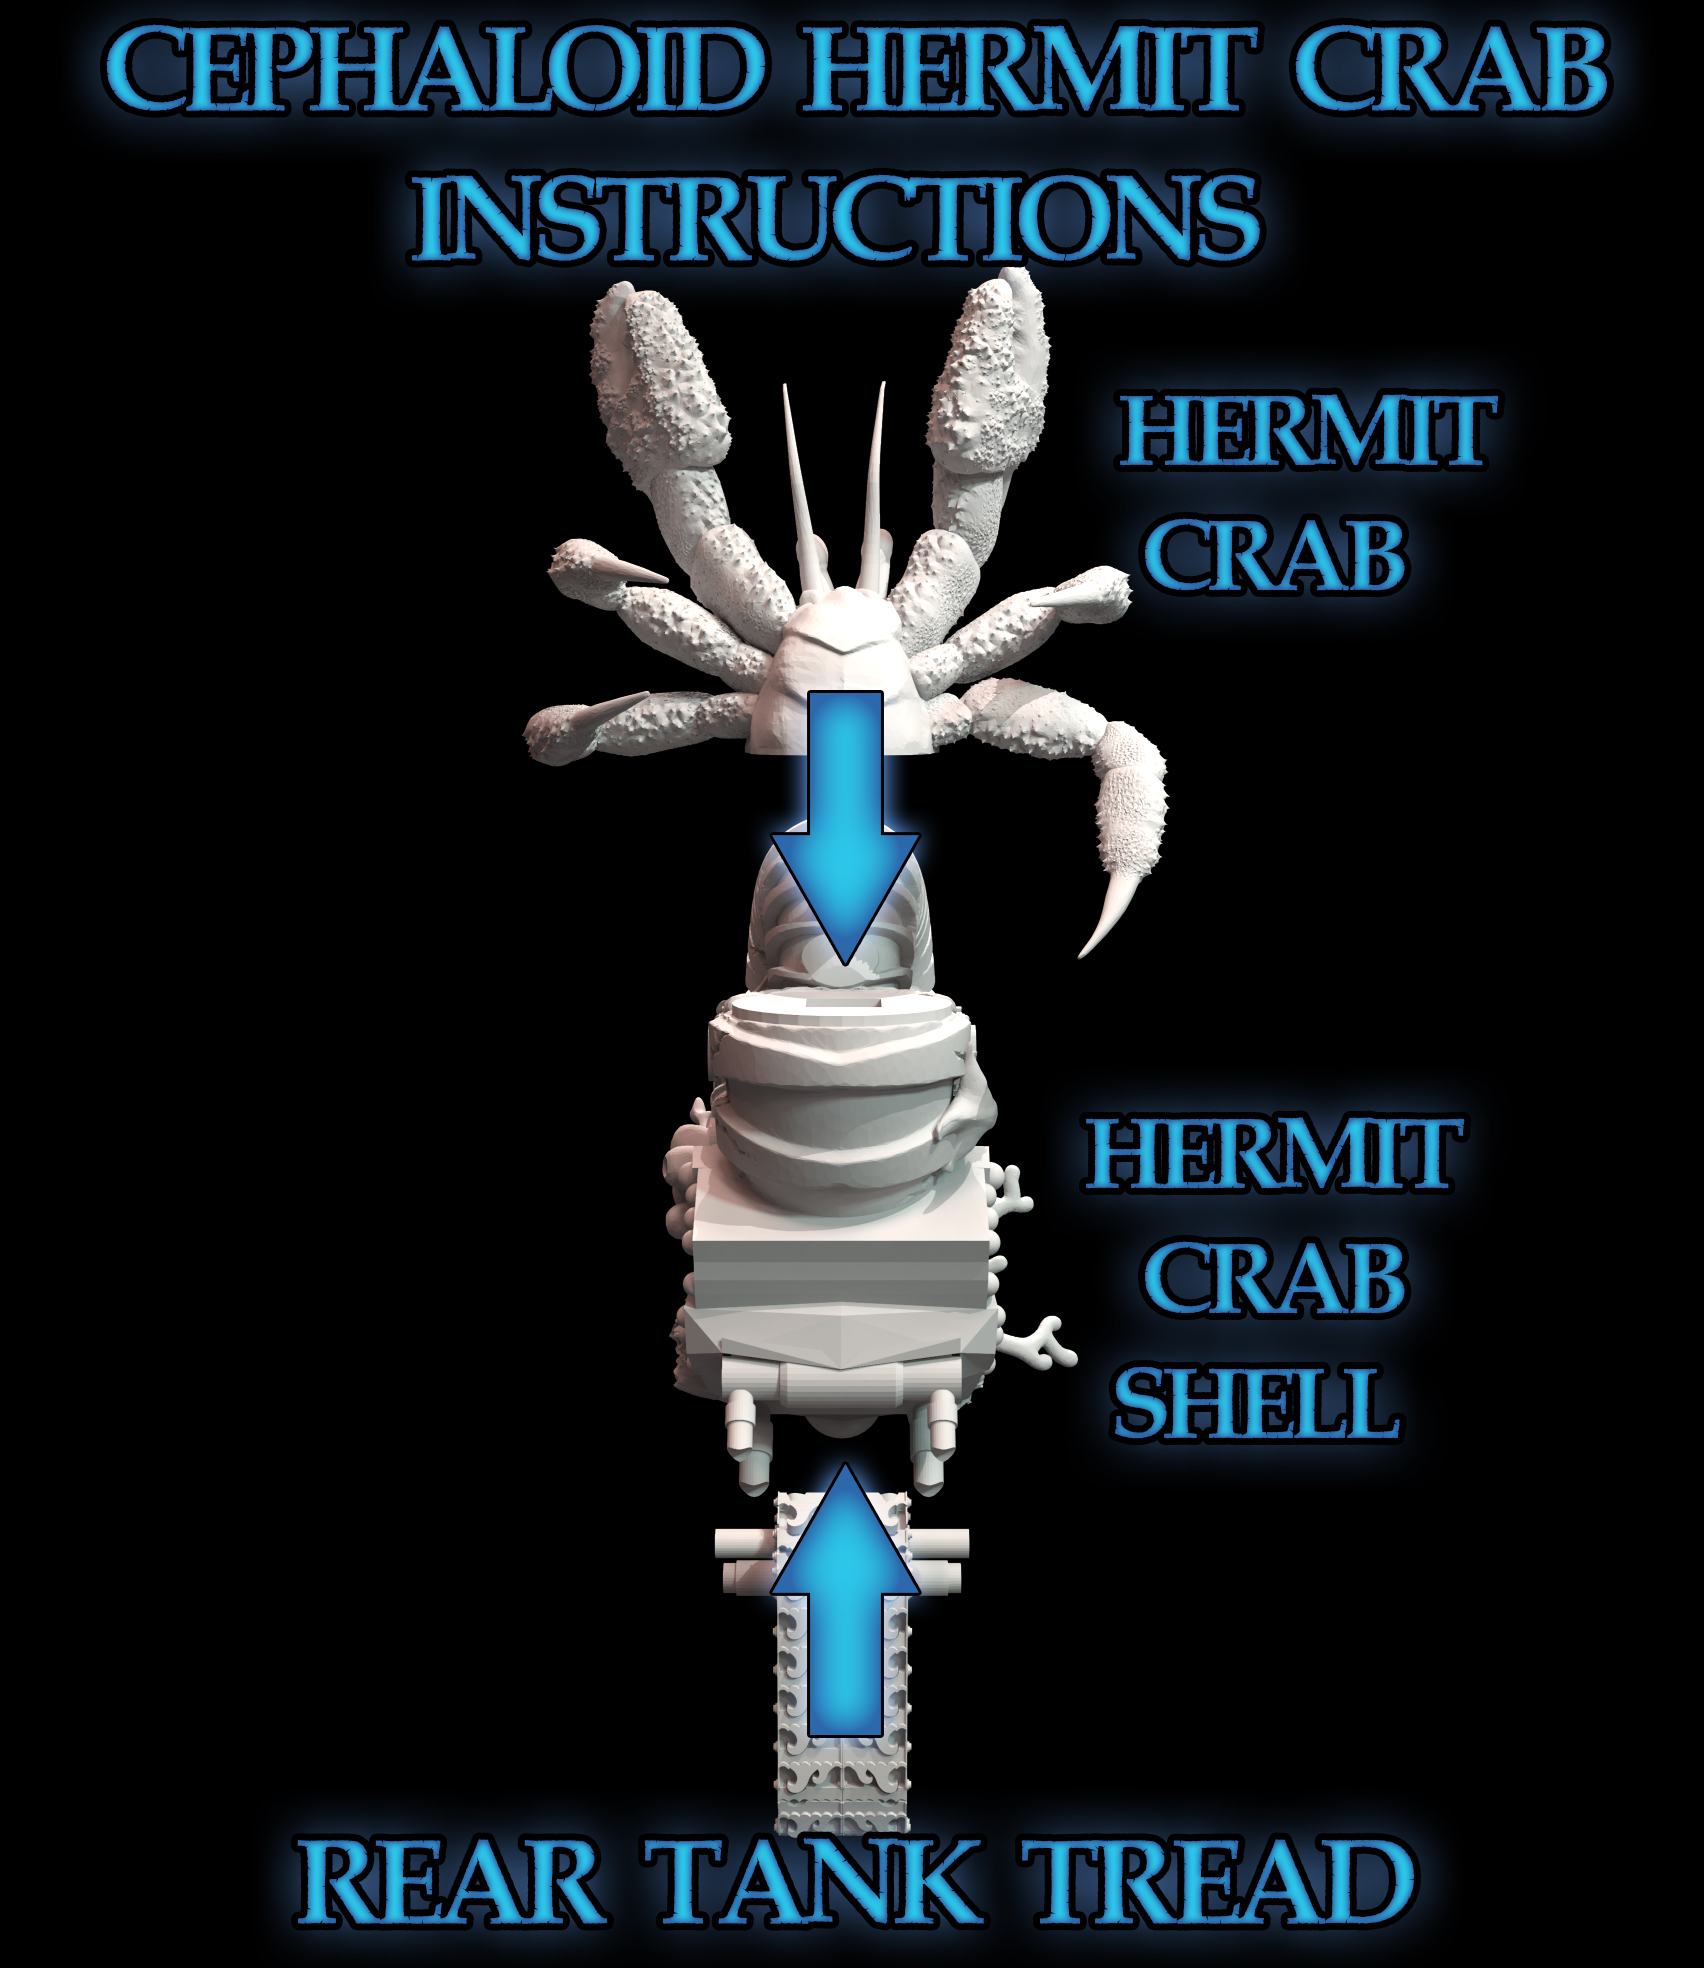 Cephaloid Hermit instructions